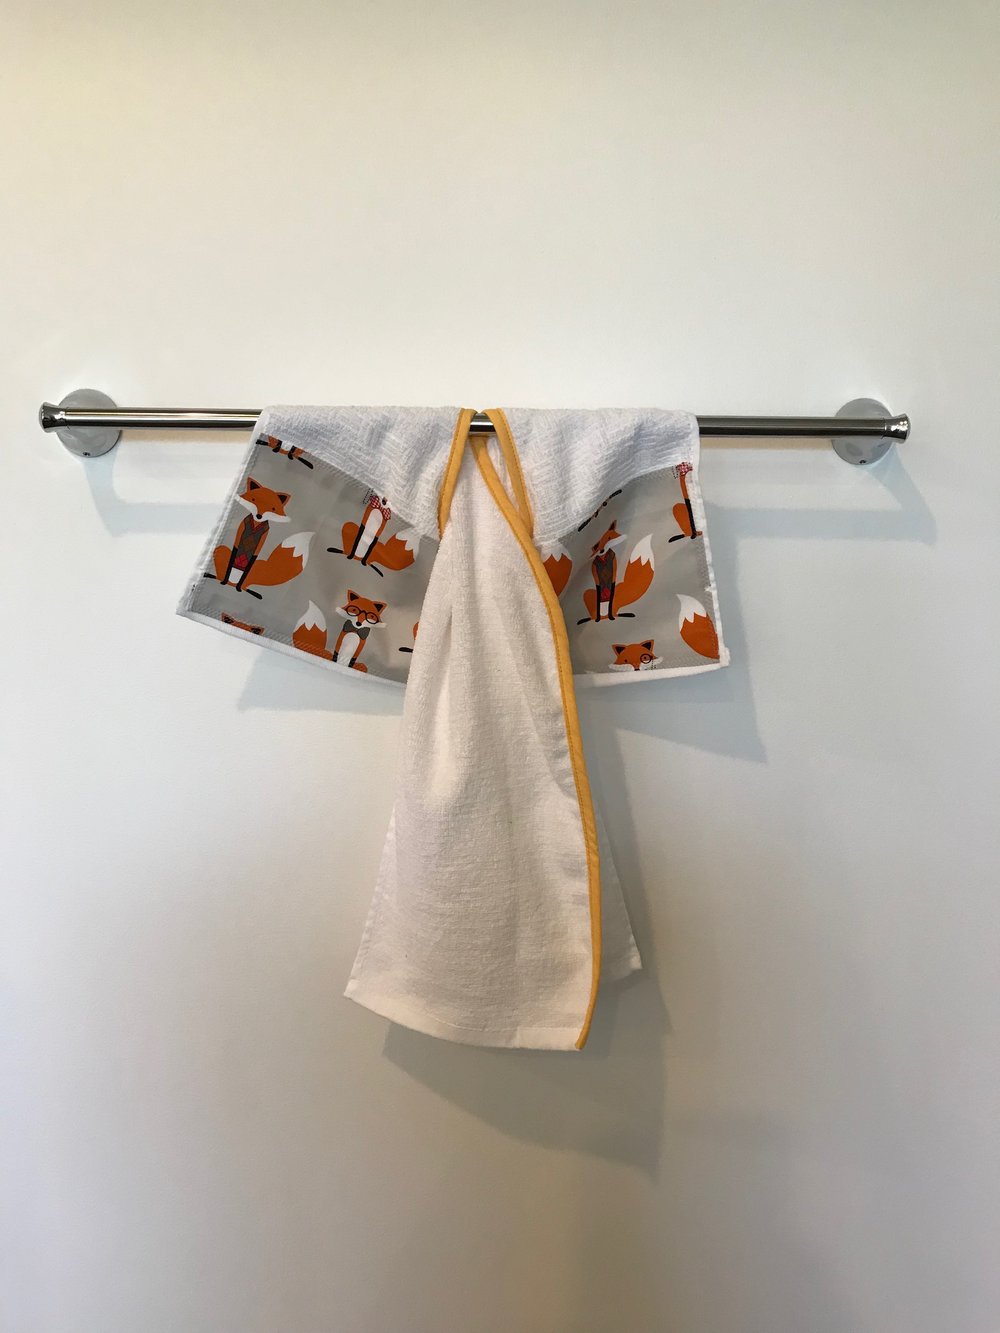 White + Orange Kitchen Towel